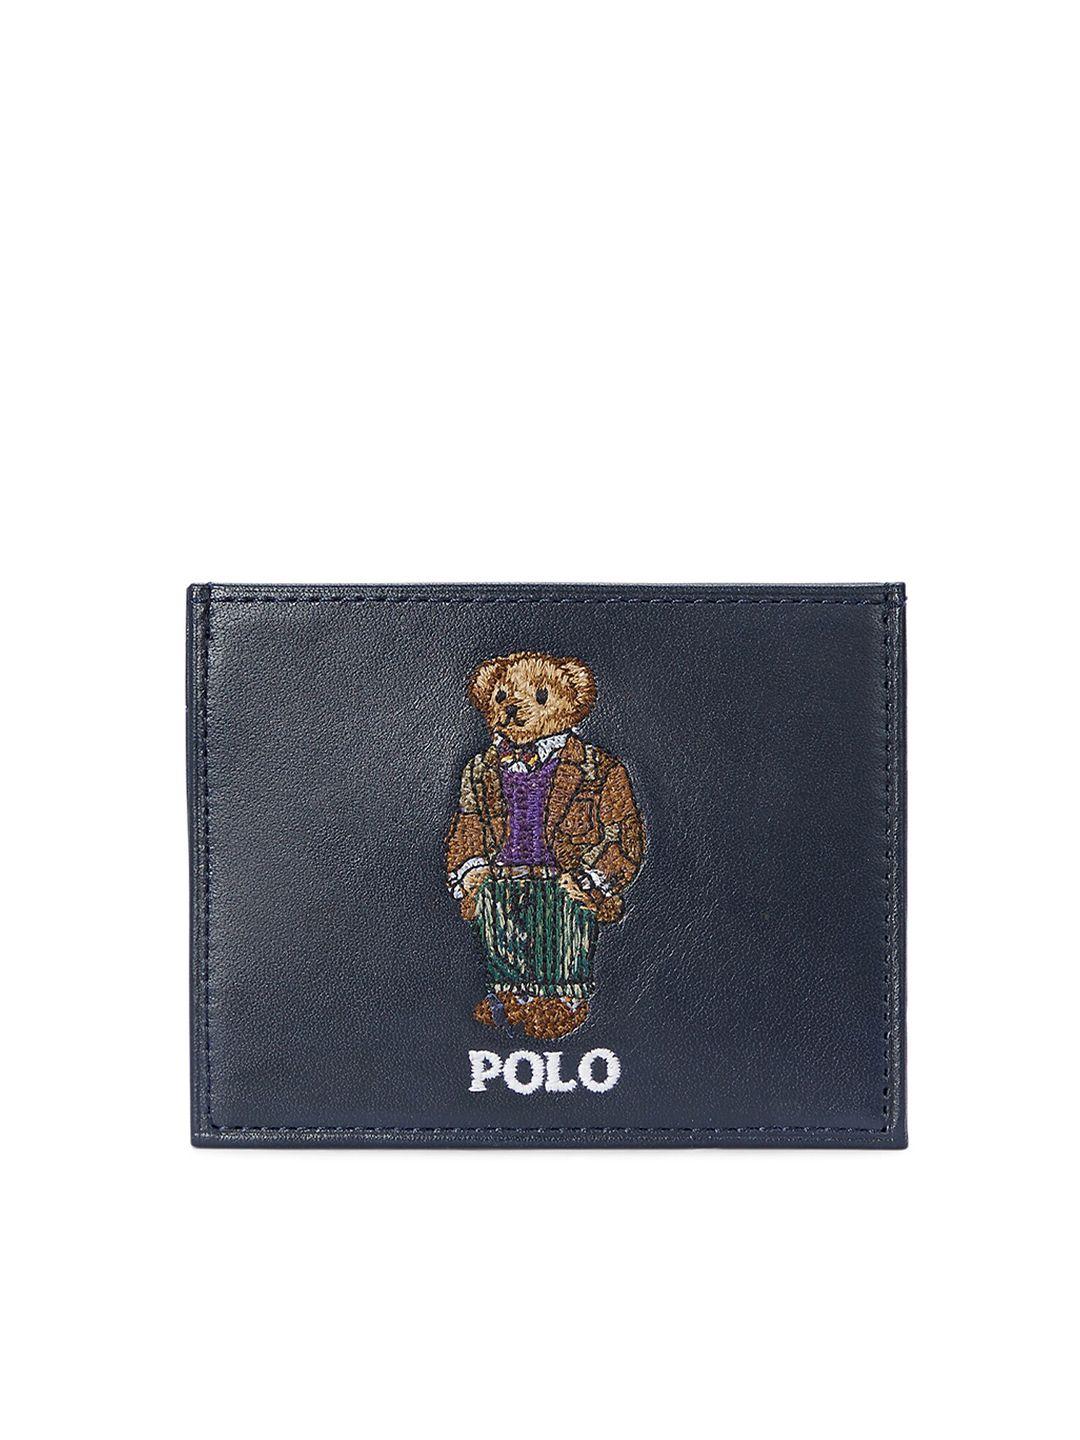 polo-ralph-lauren-leather-card-case